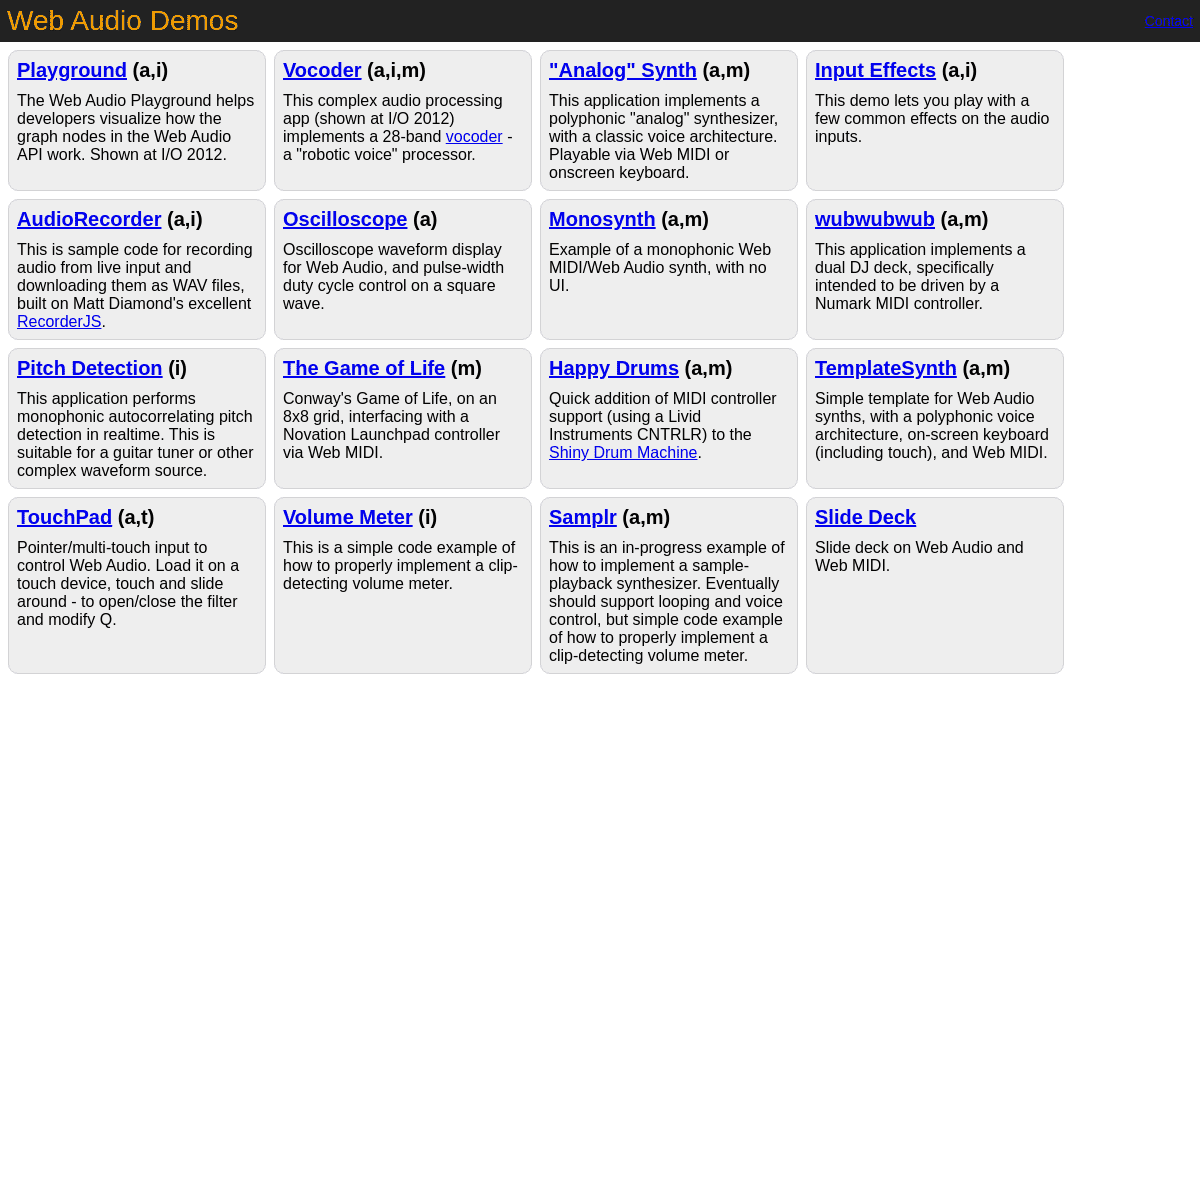 A complete backup of webaudiodemos.appspot.com